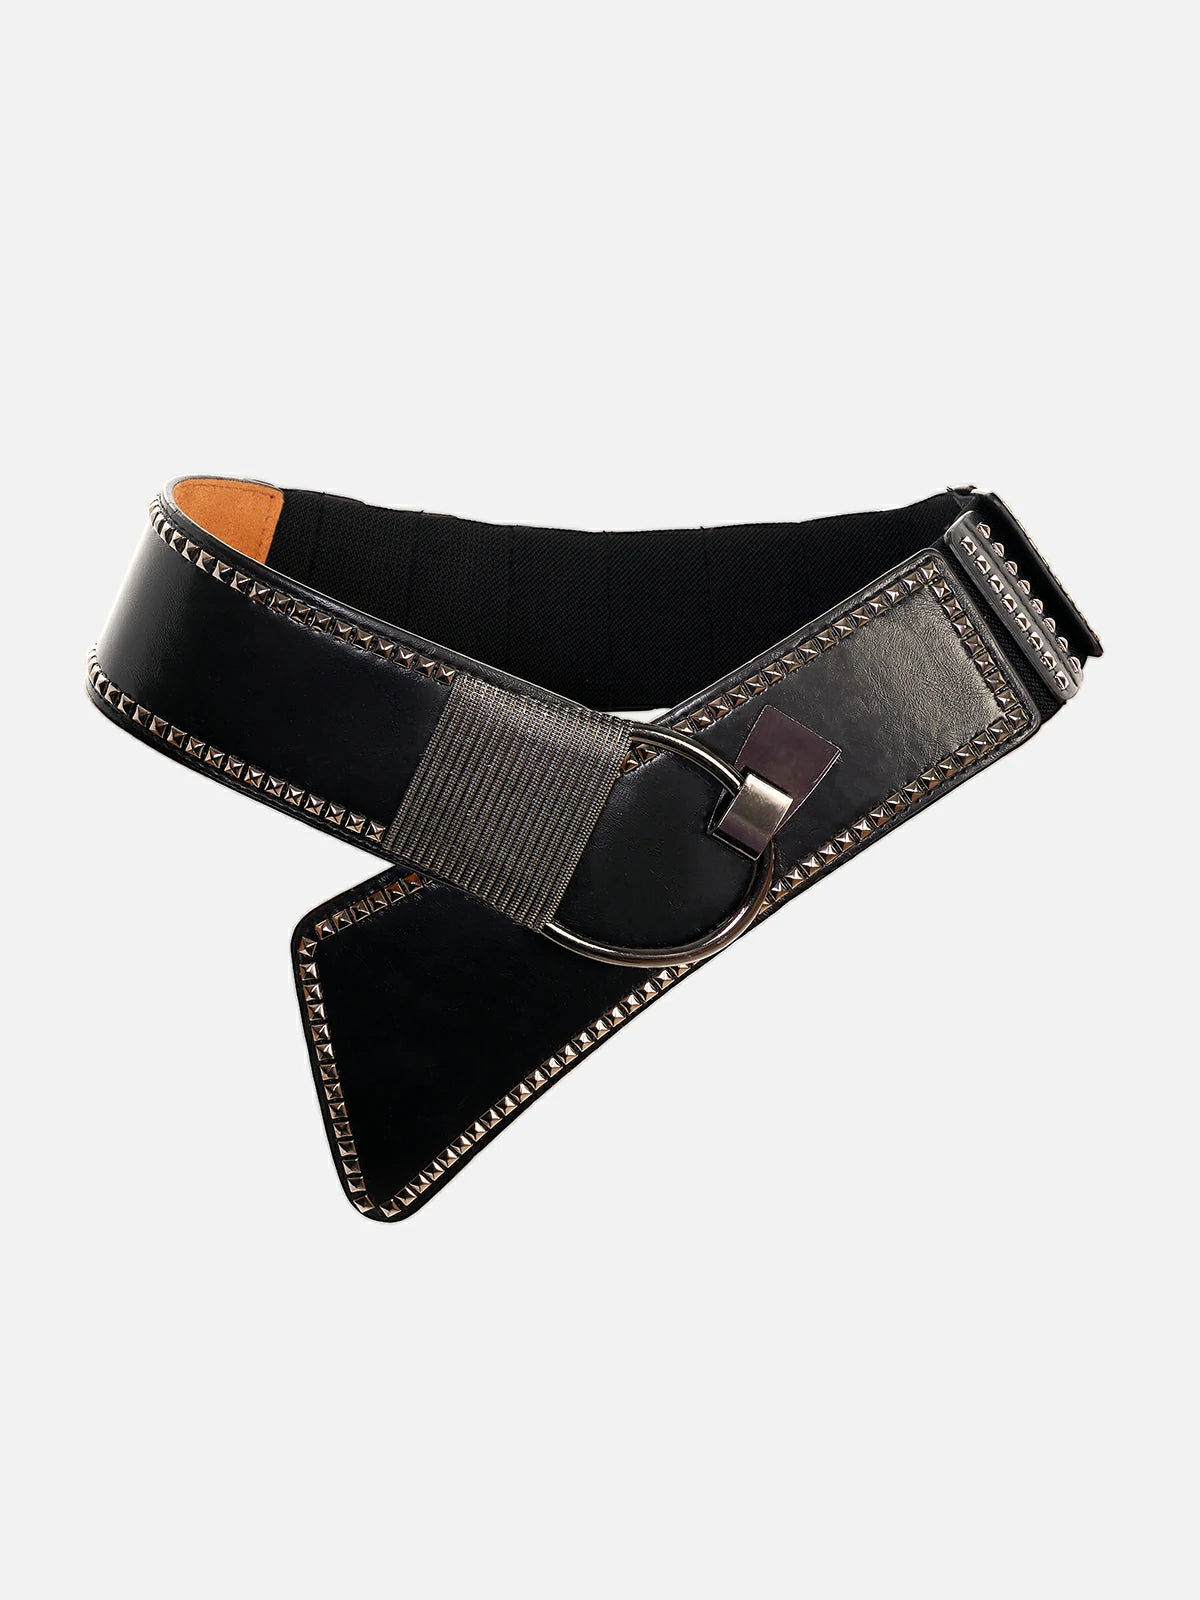 Cinturón elástico con tachuelas de moda